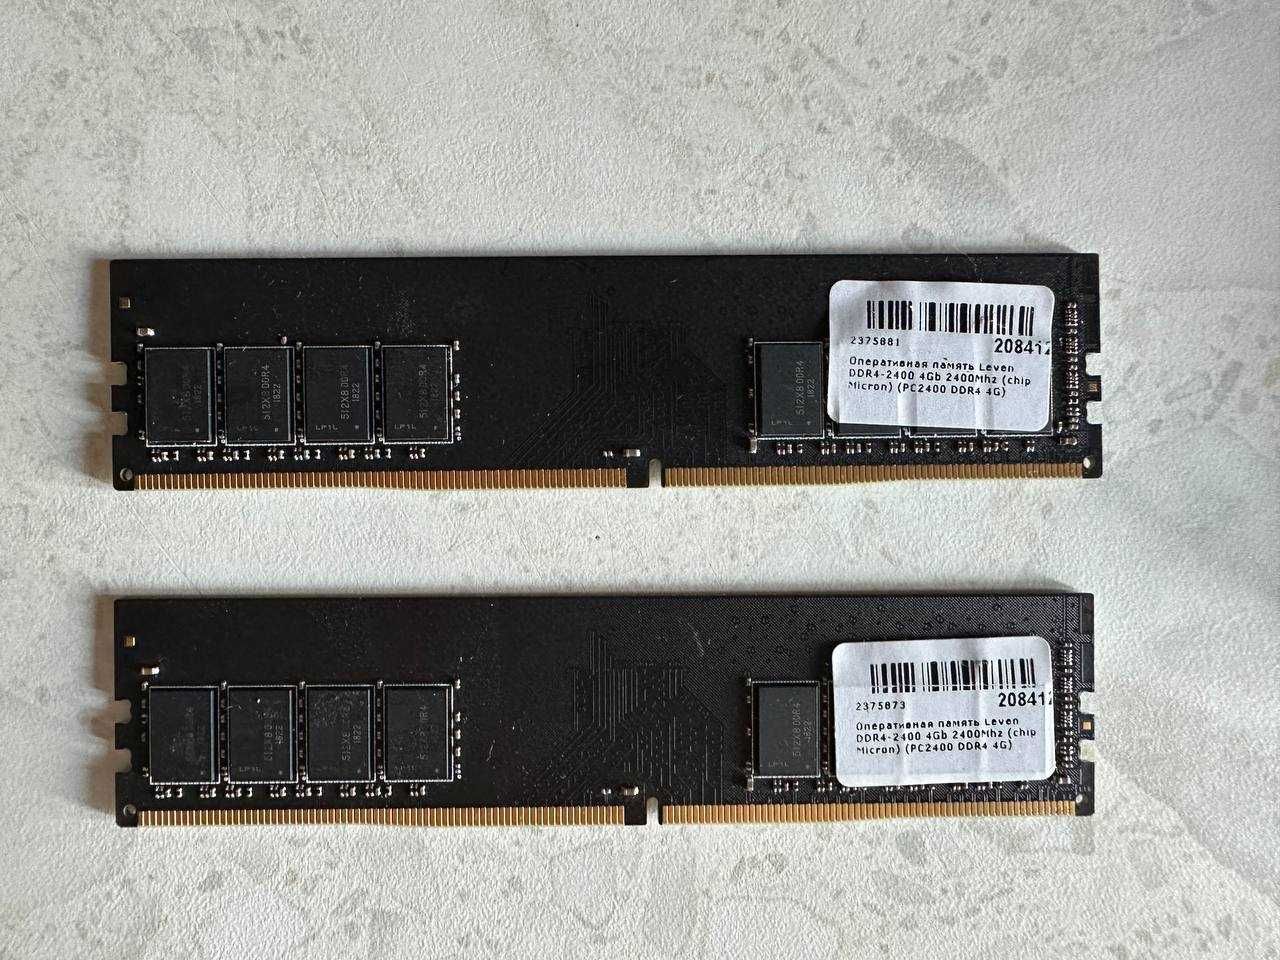 DDR4 - 2400 4Gb Leven (chip Micron) є 2 пари (4шт)